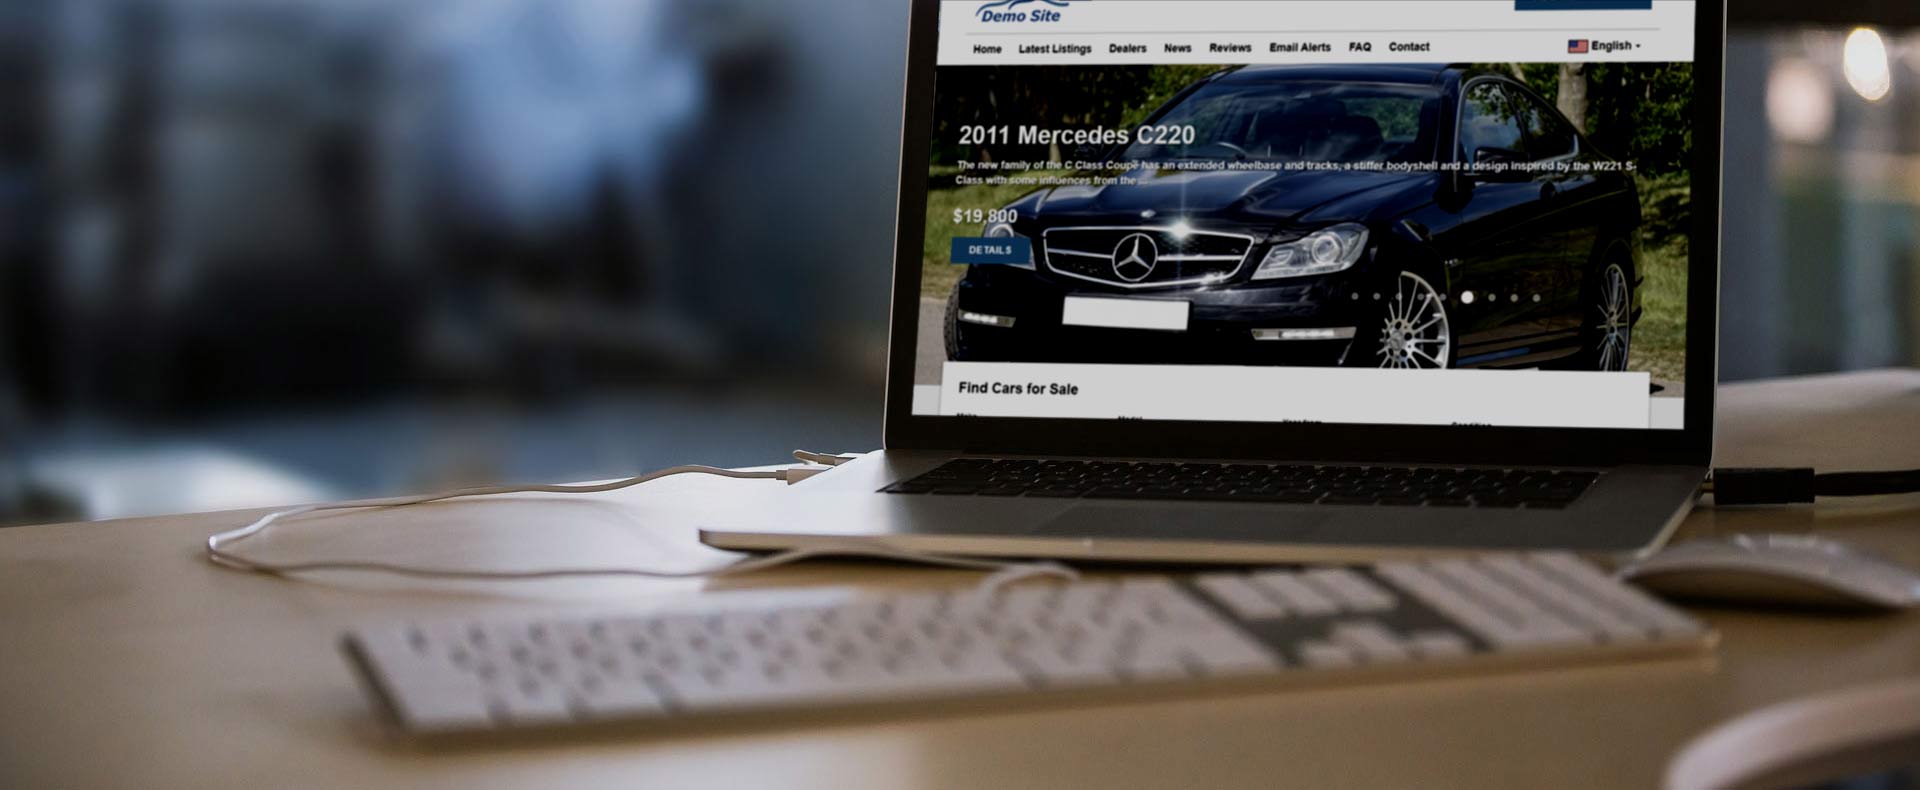 cars portal online demos php car classifieds script 